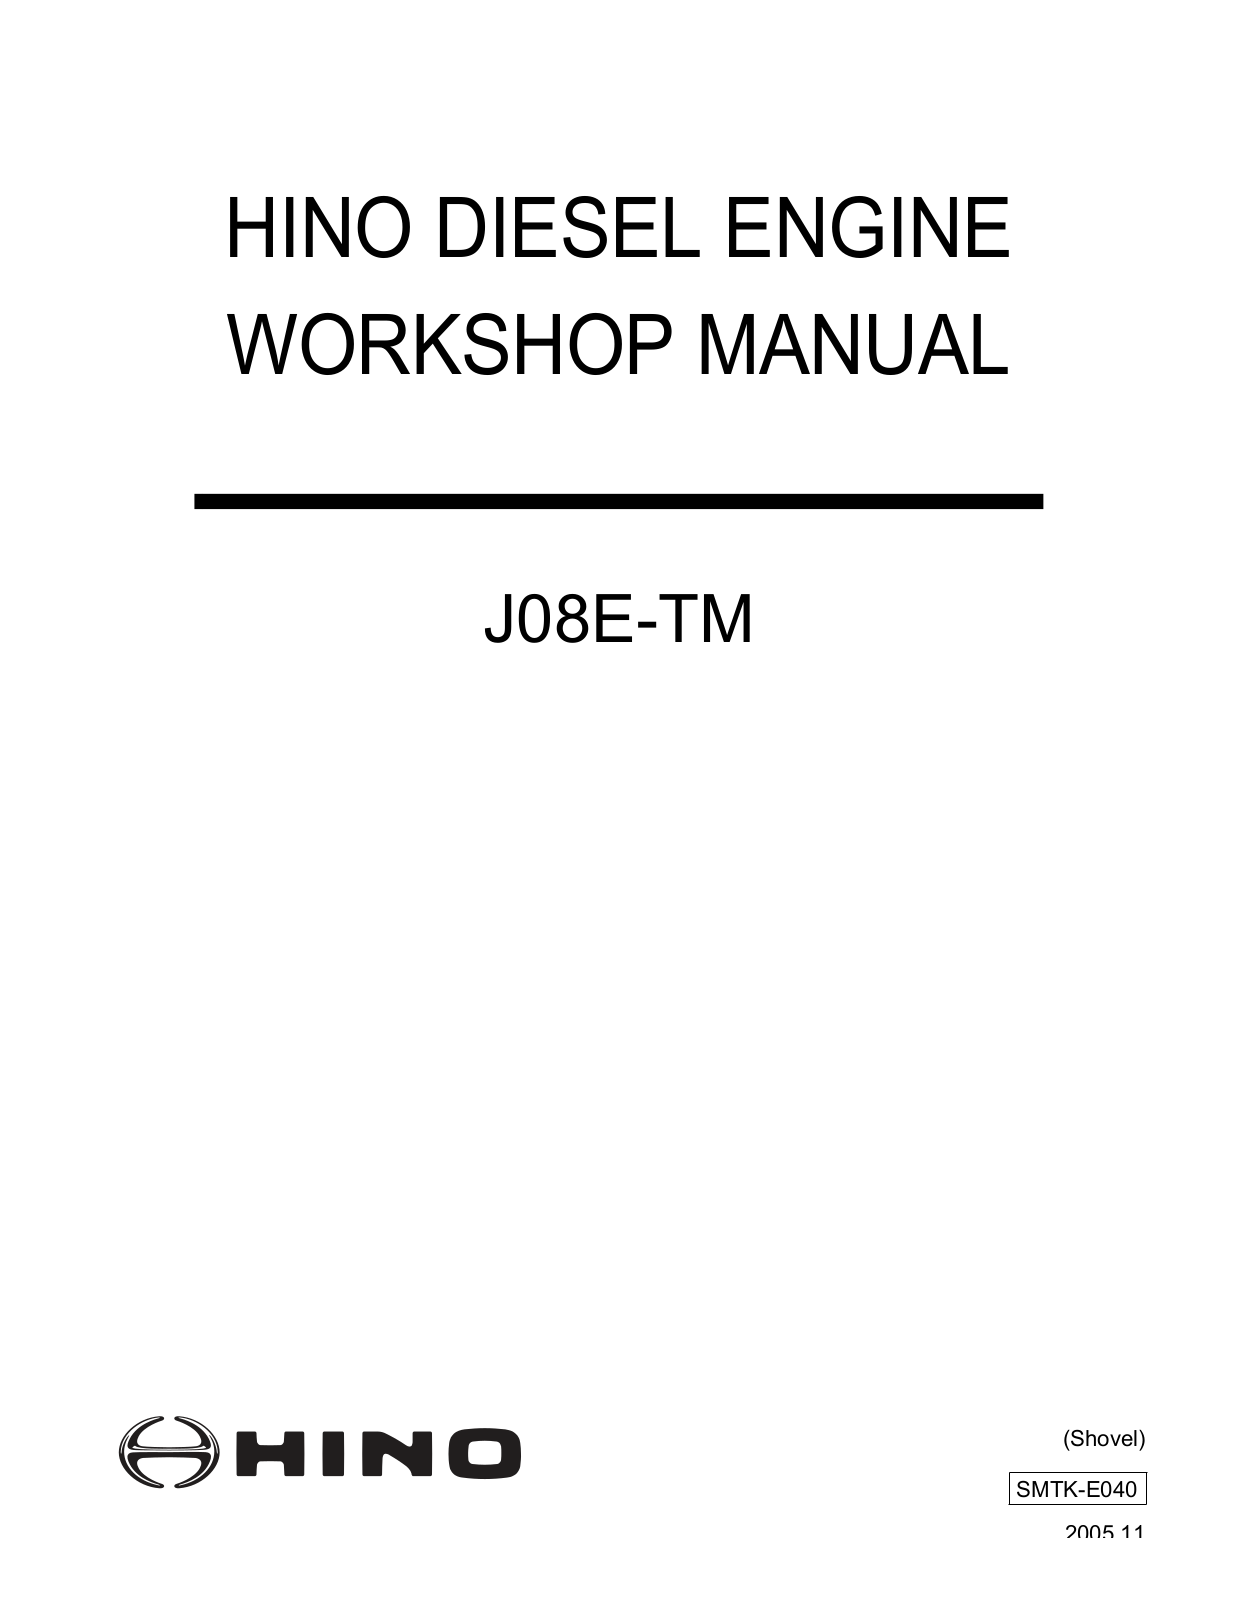 Hino j08e-Tm Service Manual